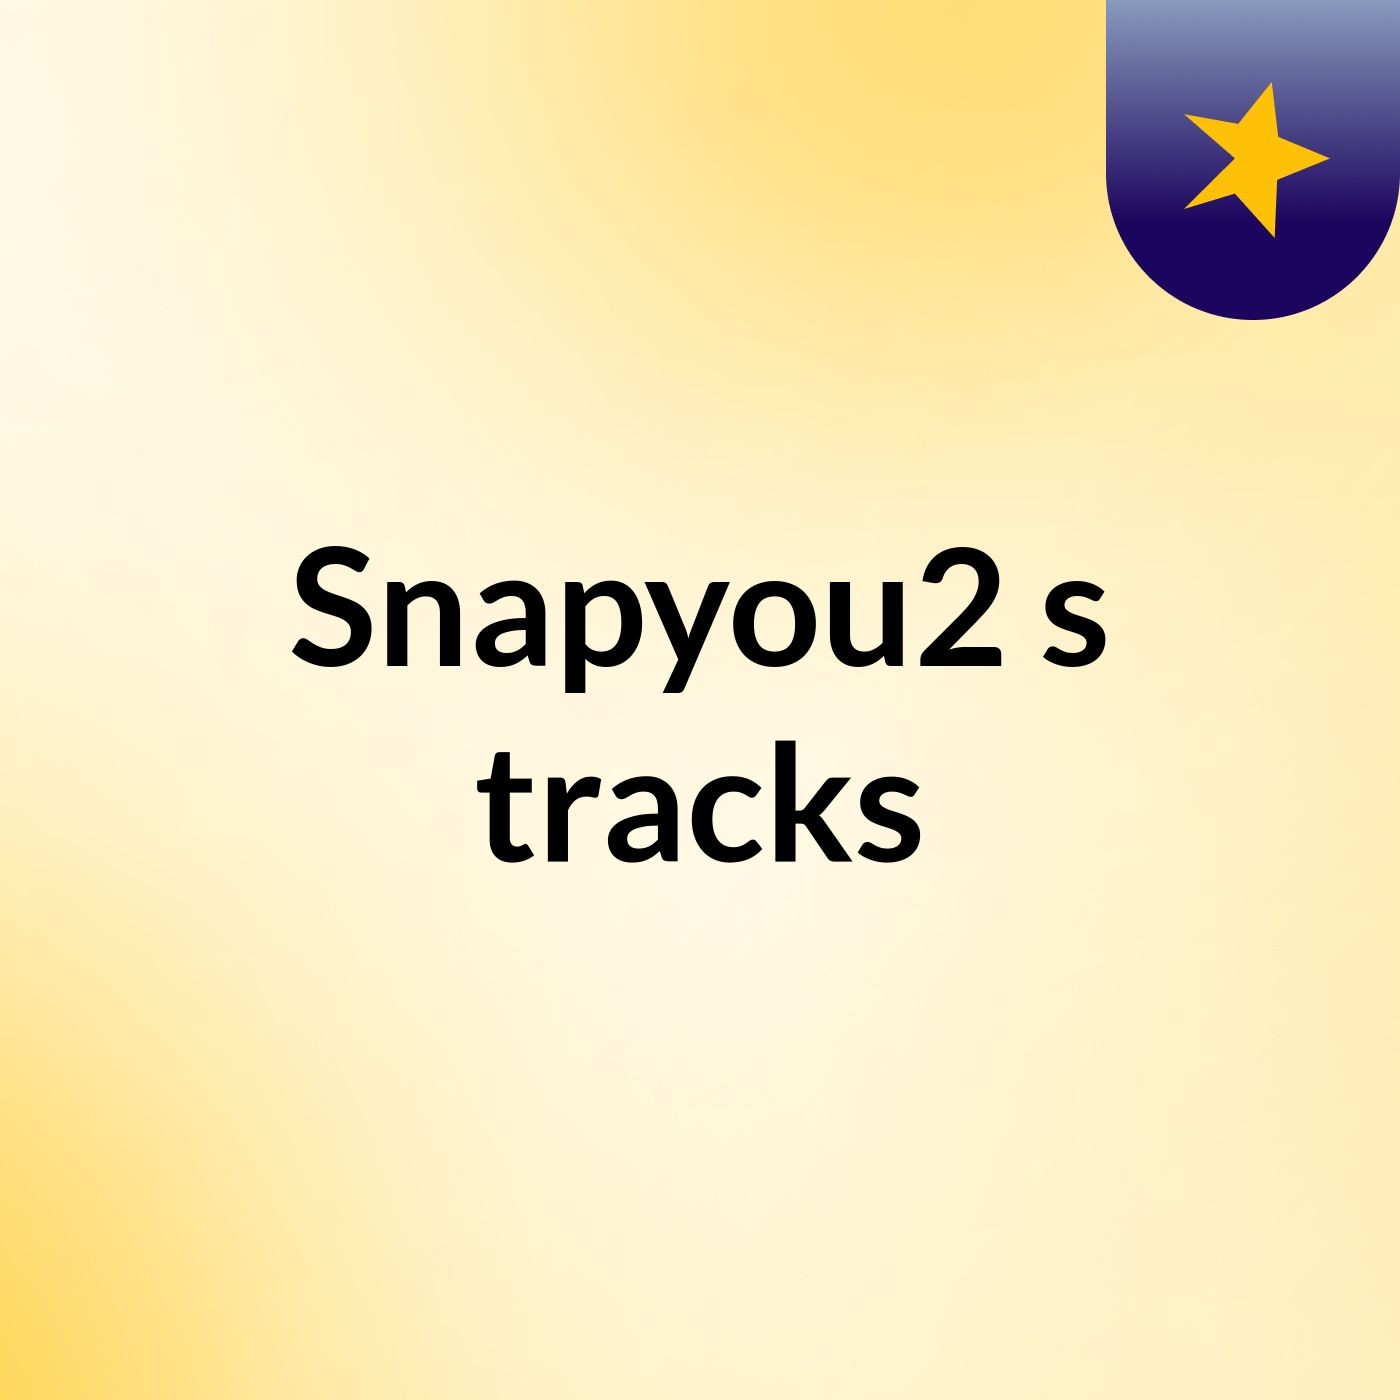 Snapyou2's tracks